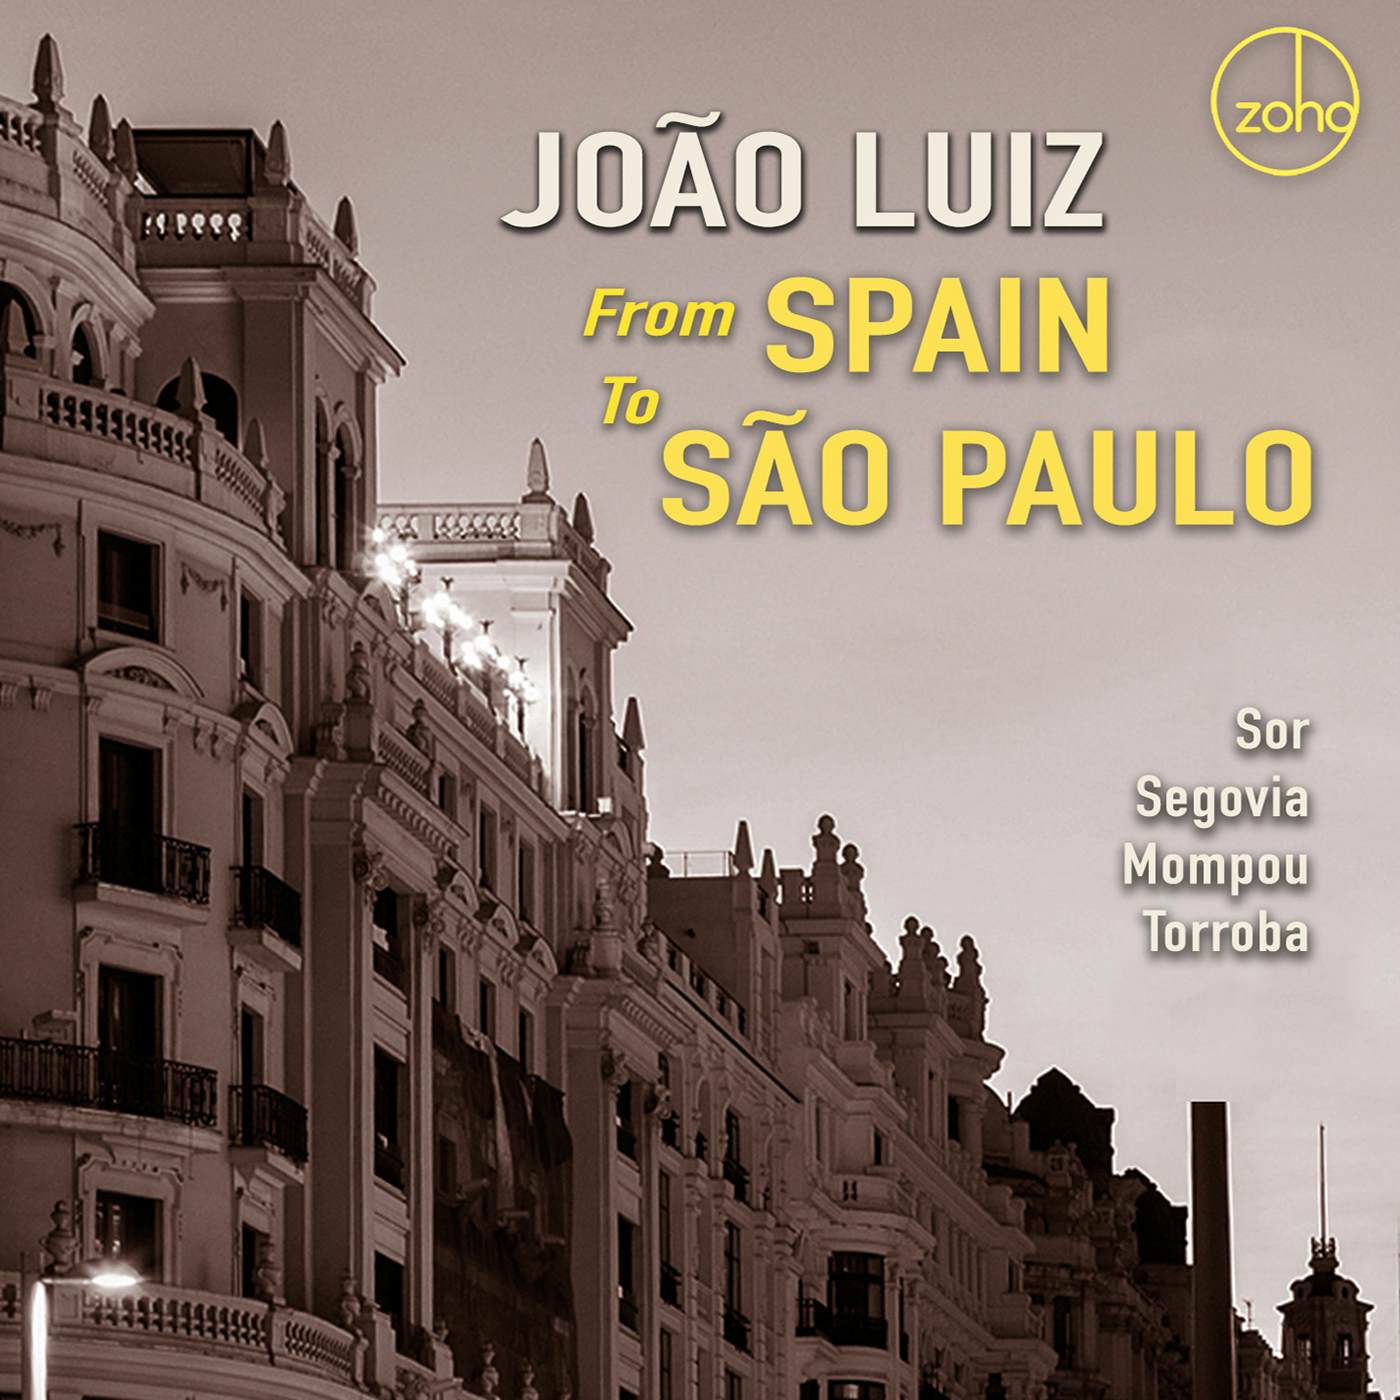 Joao Luiz FROM SPAIN TO SAO PAULO CD